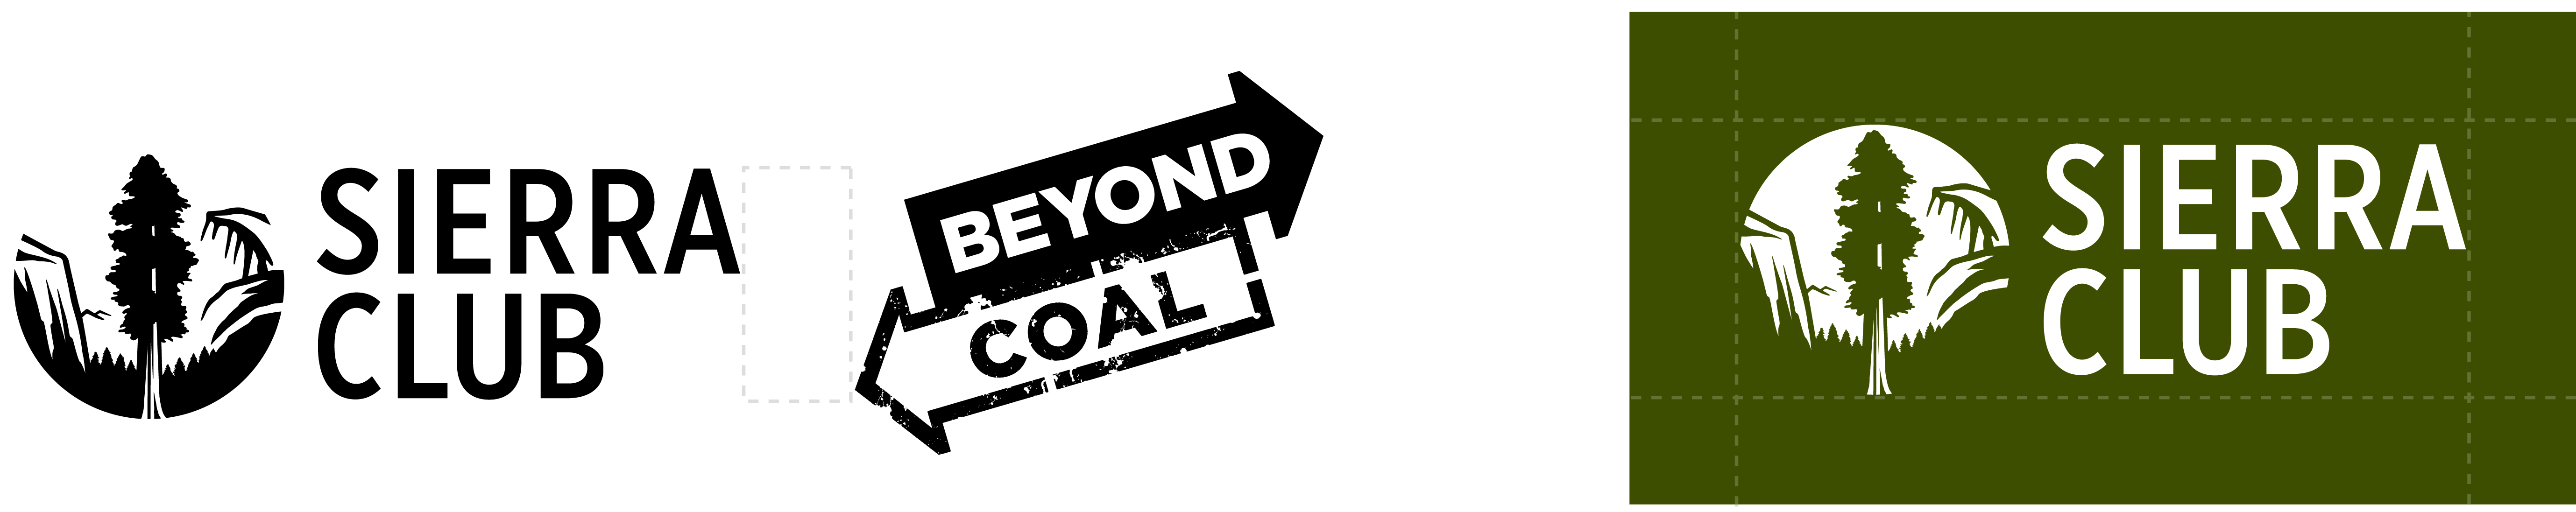 Sierra Club logo - correct padding around logo